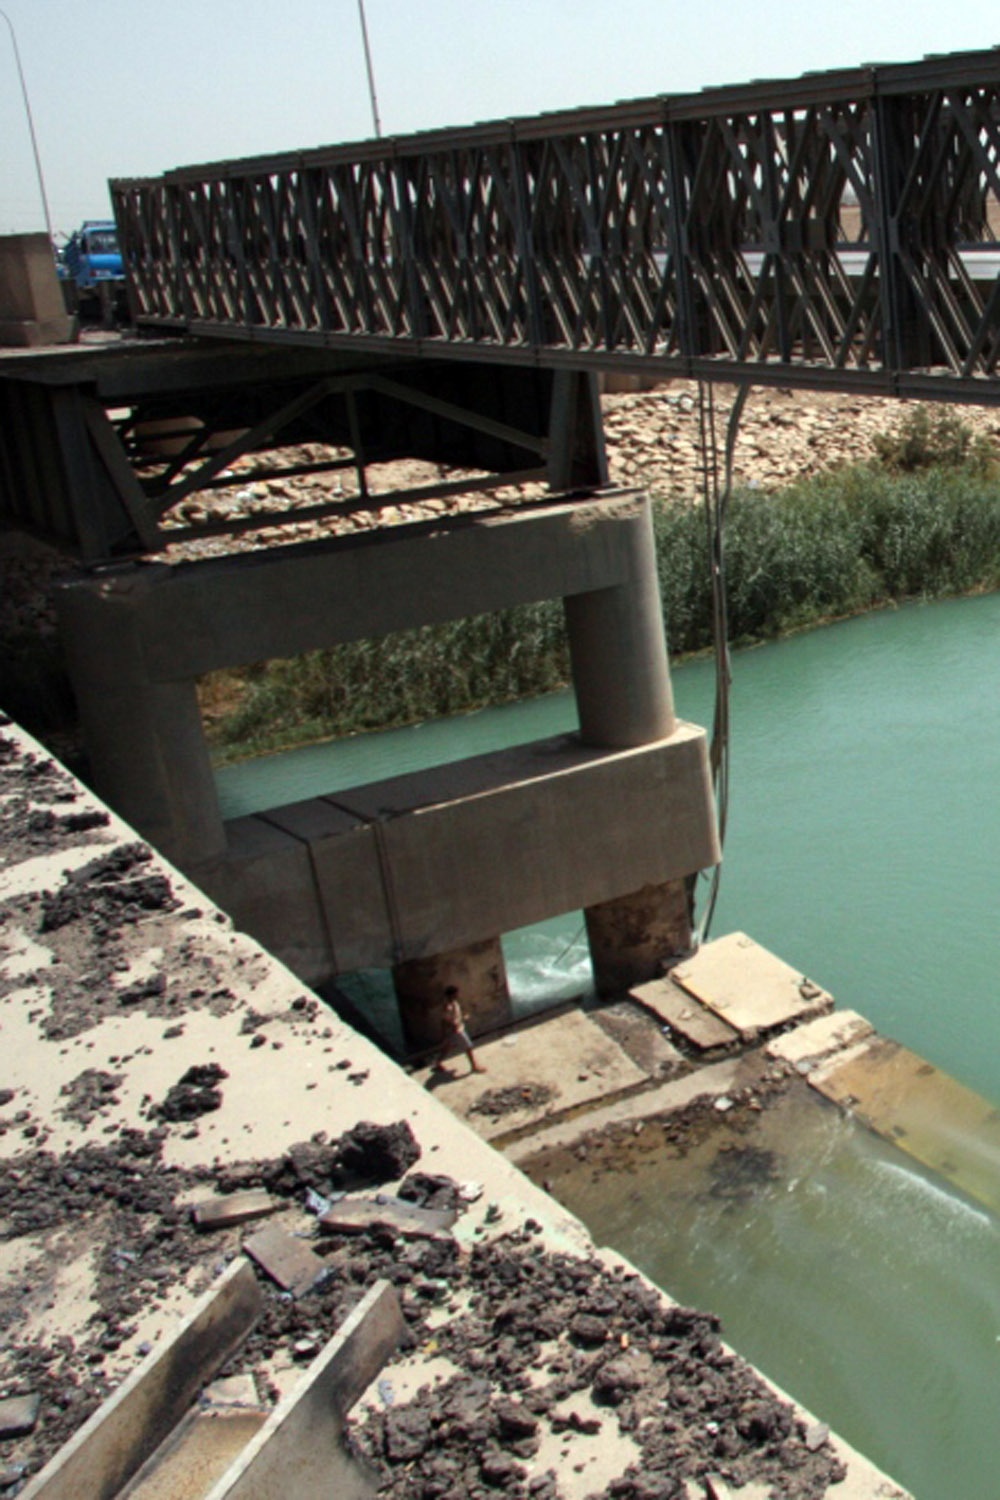 Government of Iraq renews bridge of ruins